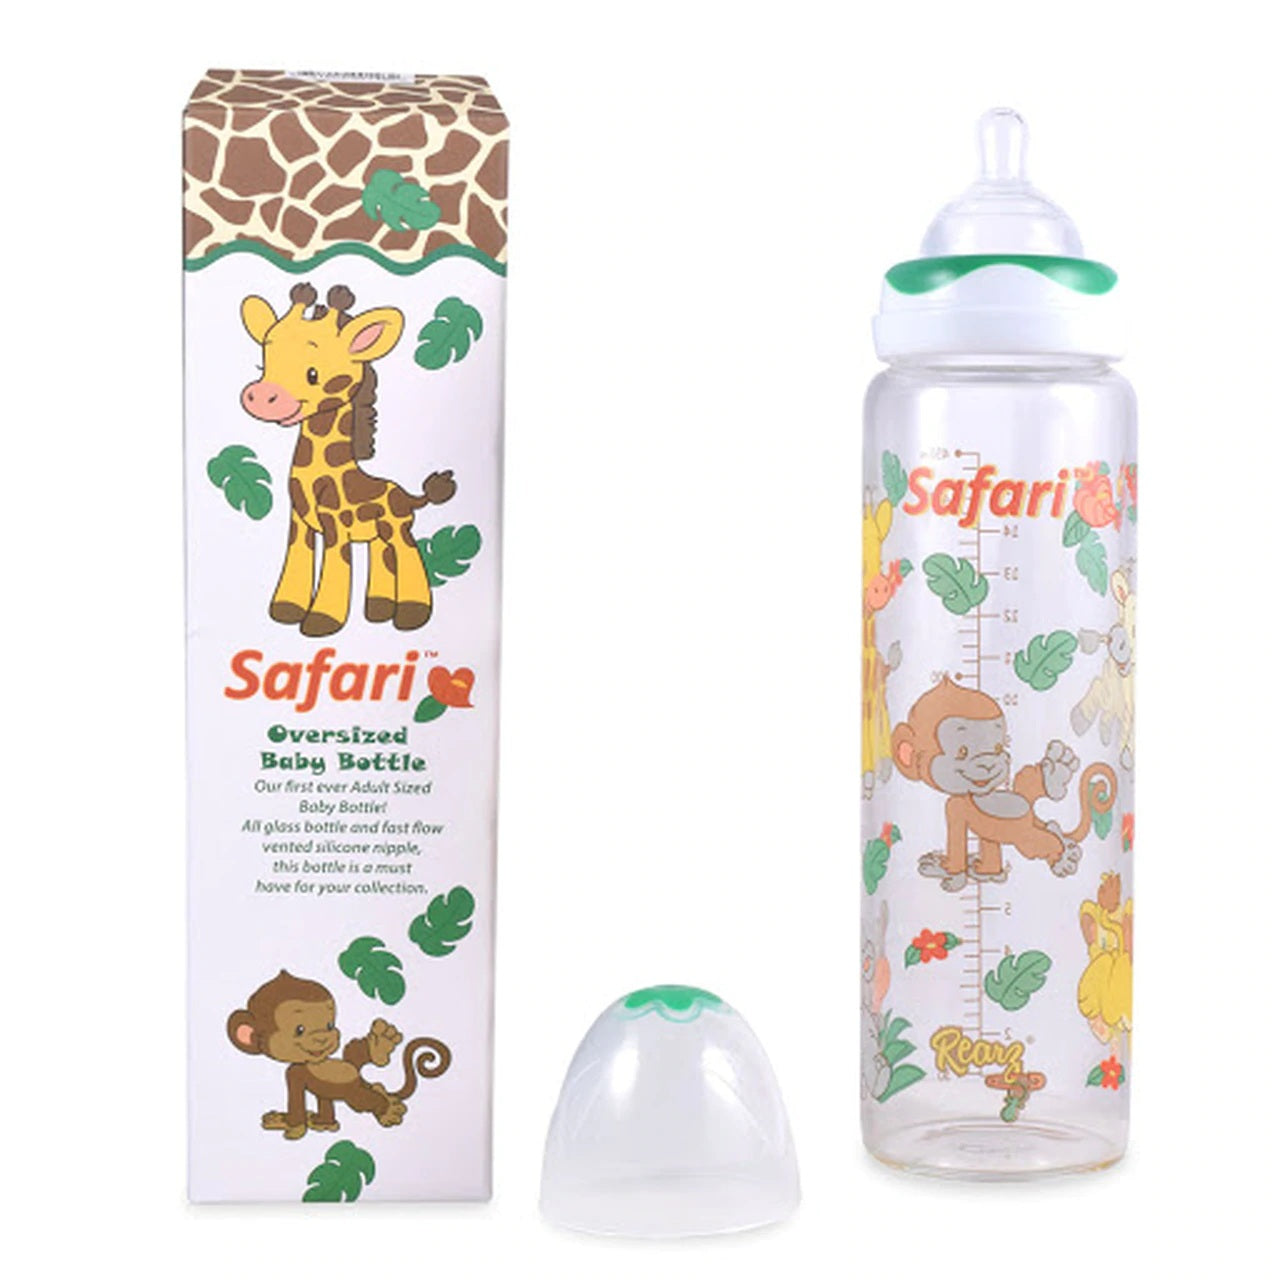 Glass Safari Adult Baby Bottle sitting next to its box.